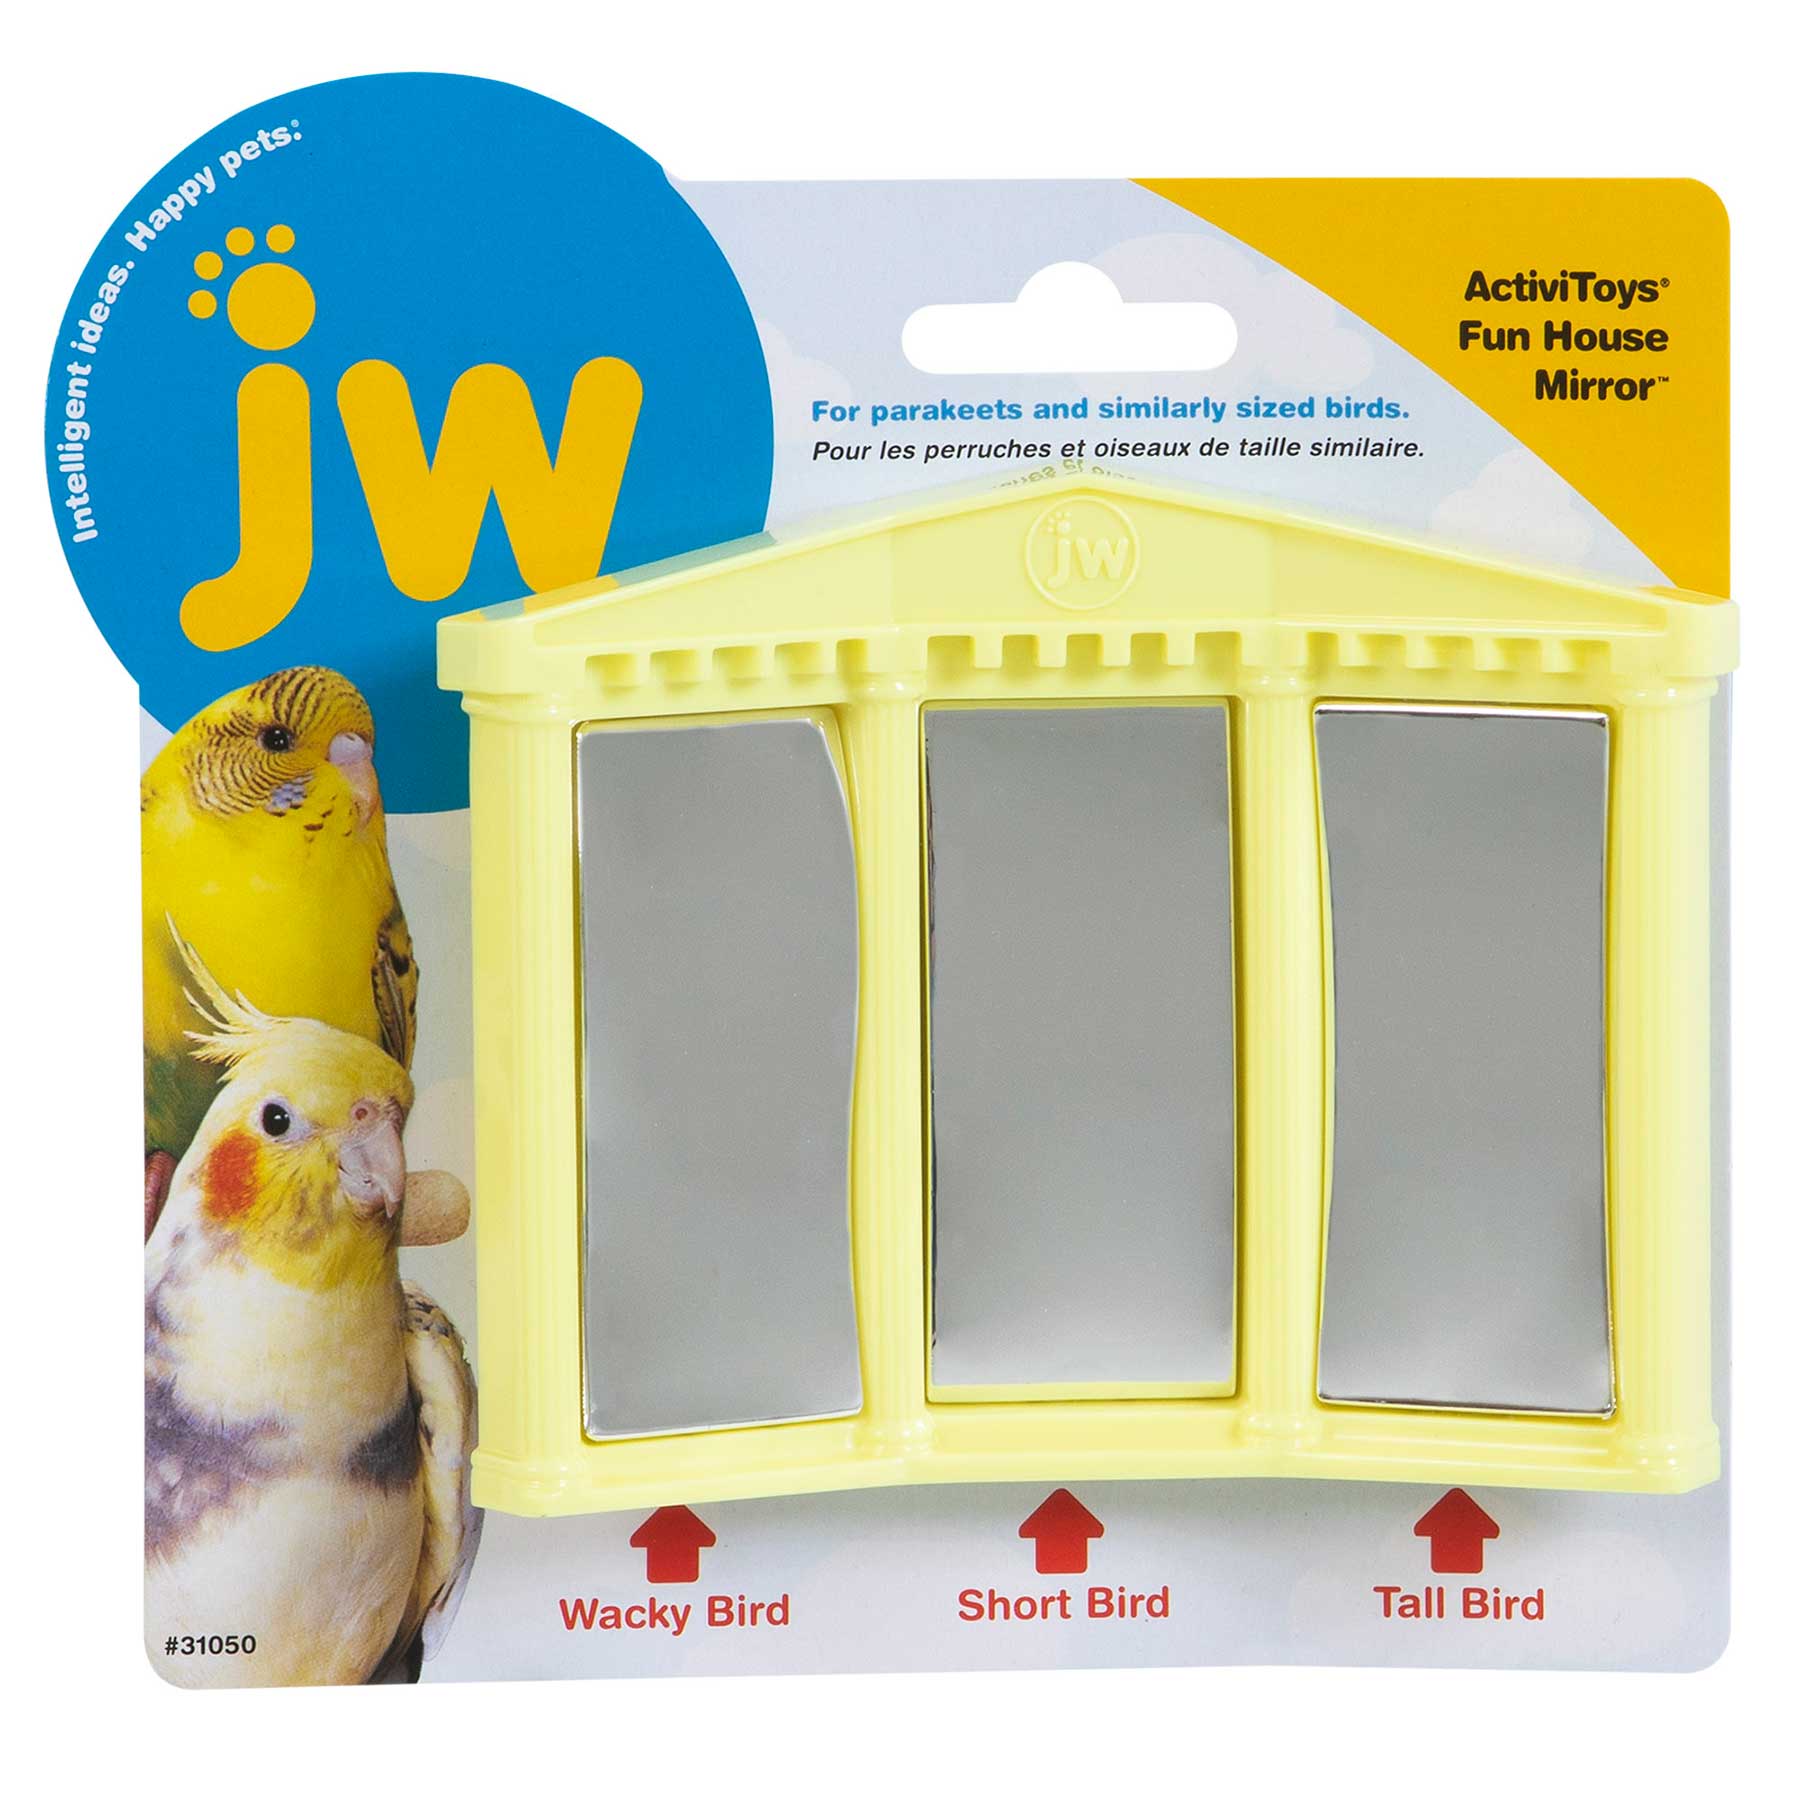 JW Pet Fun House Mirror Bird Toy